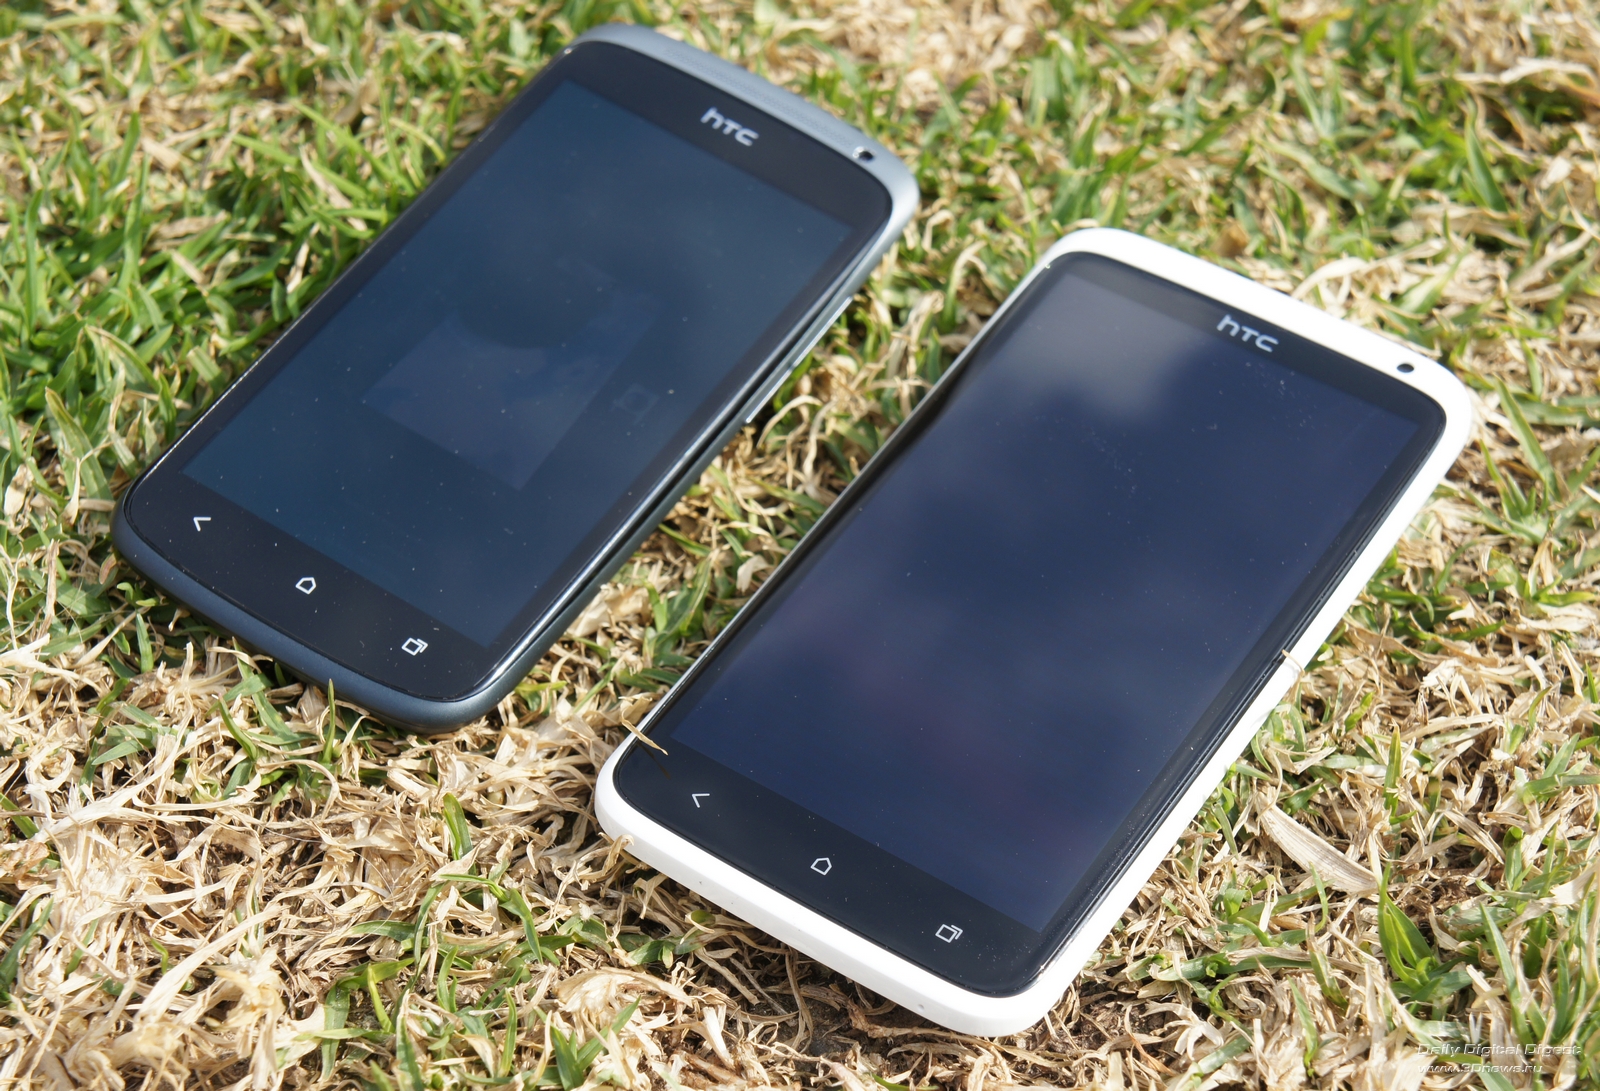 MWC-2012: предварительный обзор смартфонов HTC One X, S и V